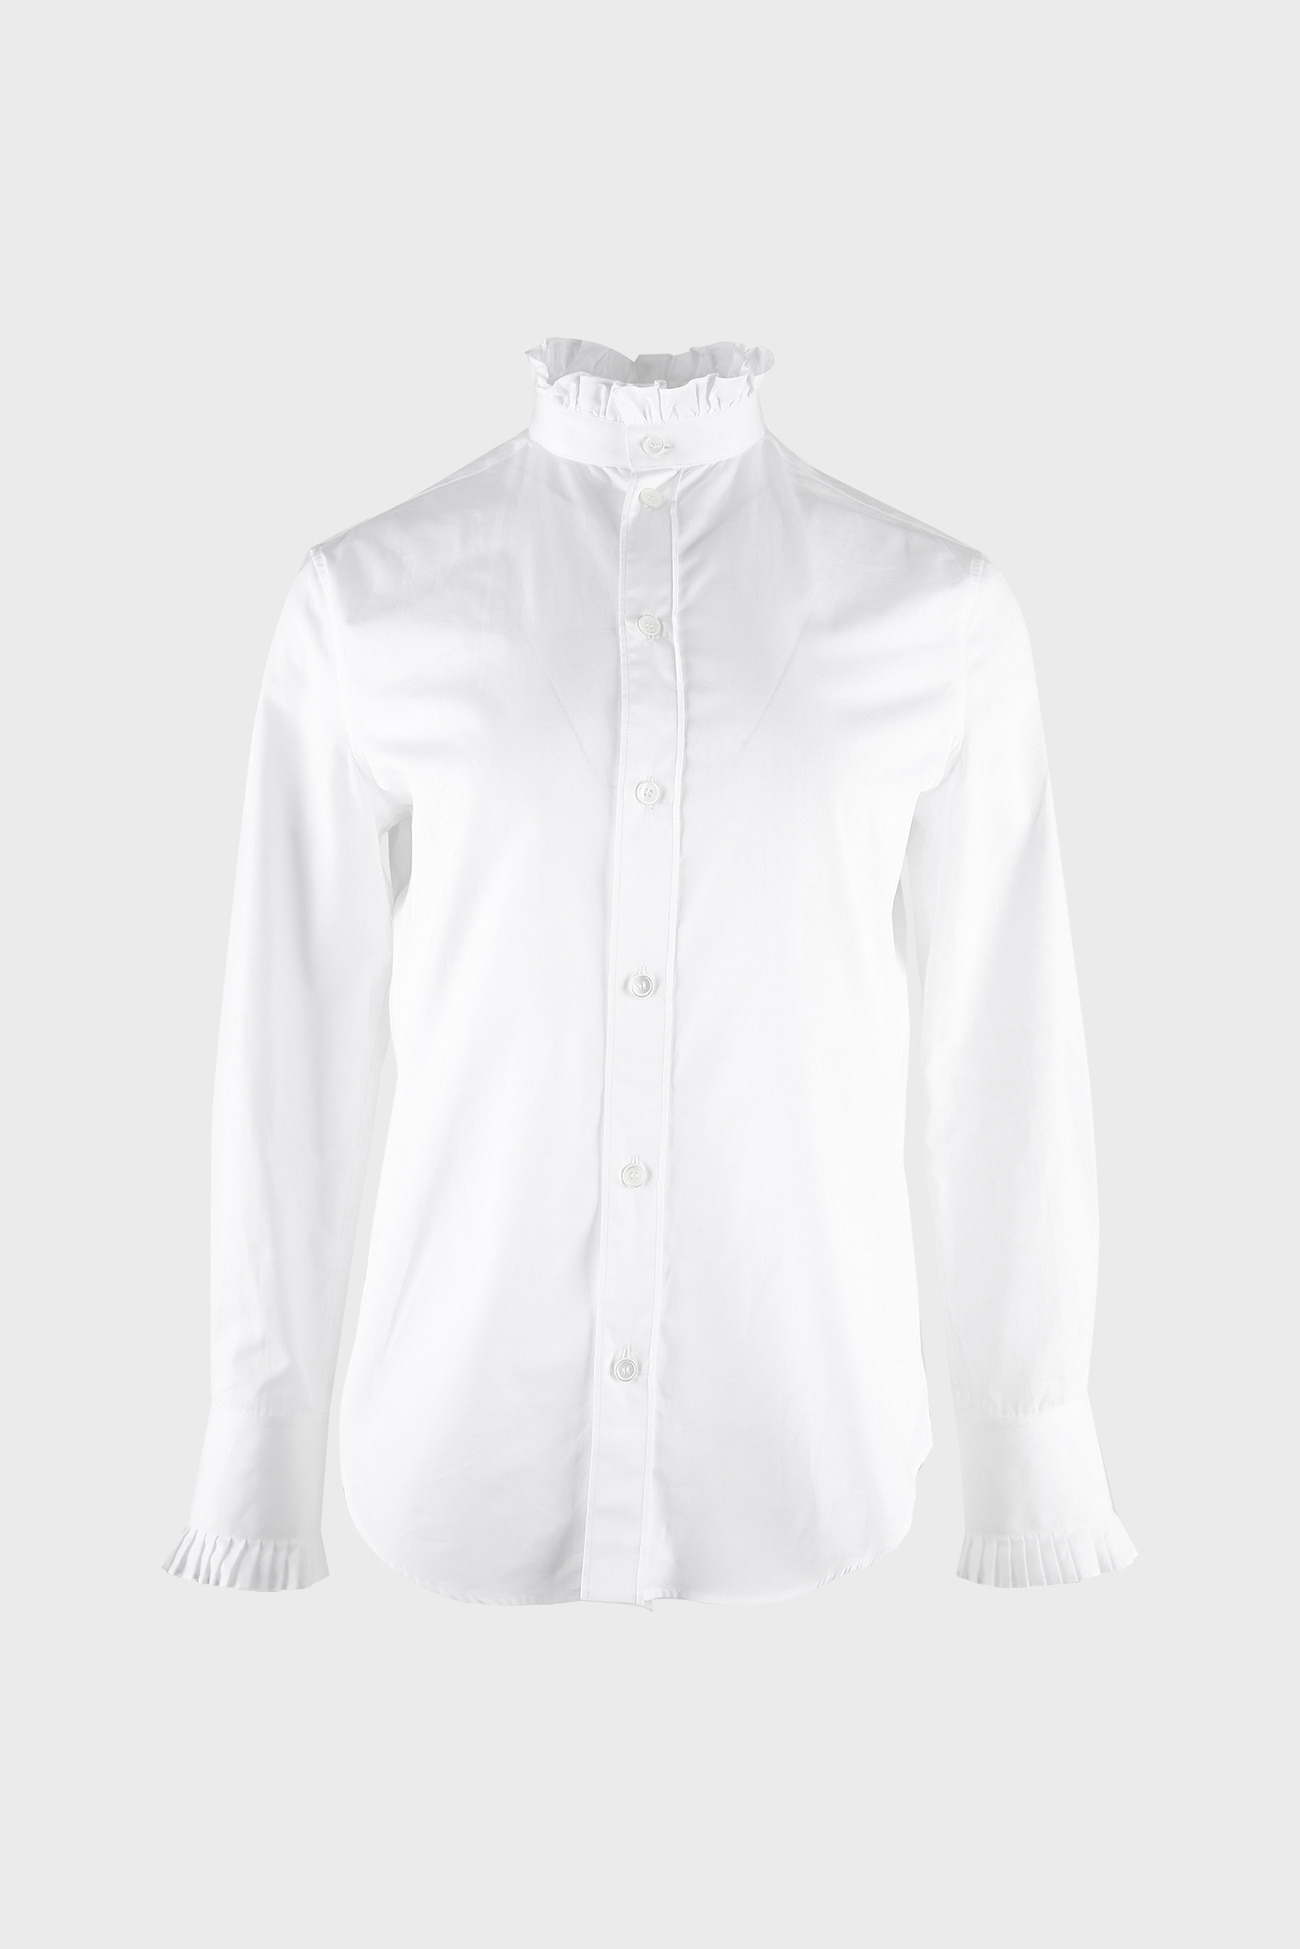 HIGH QUALITY LINE - Supima 100% Classic Shirts